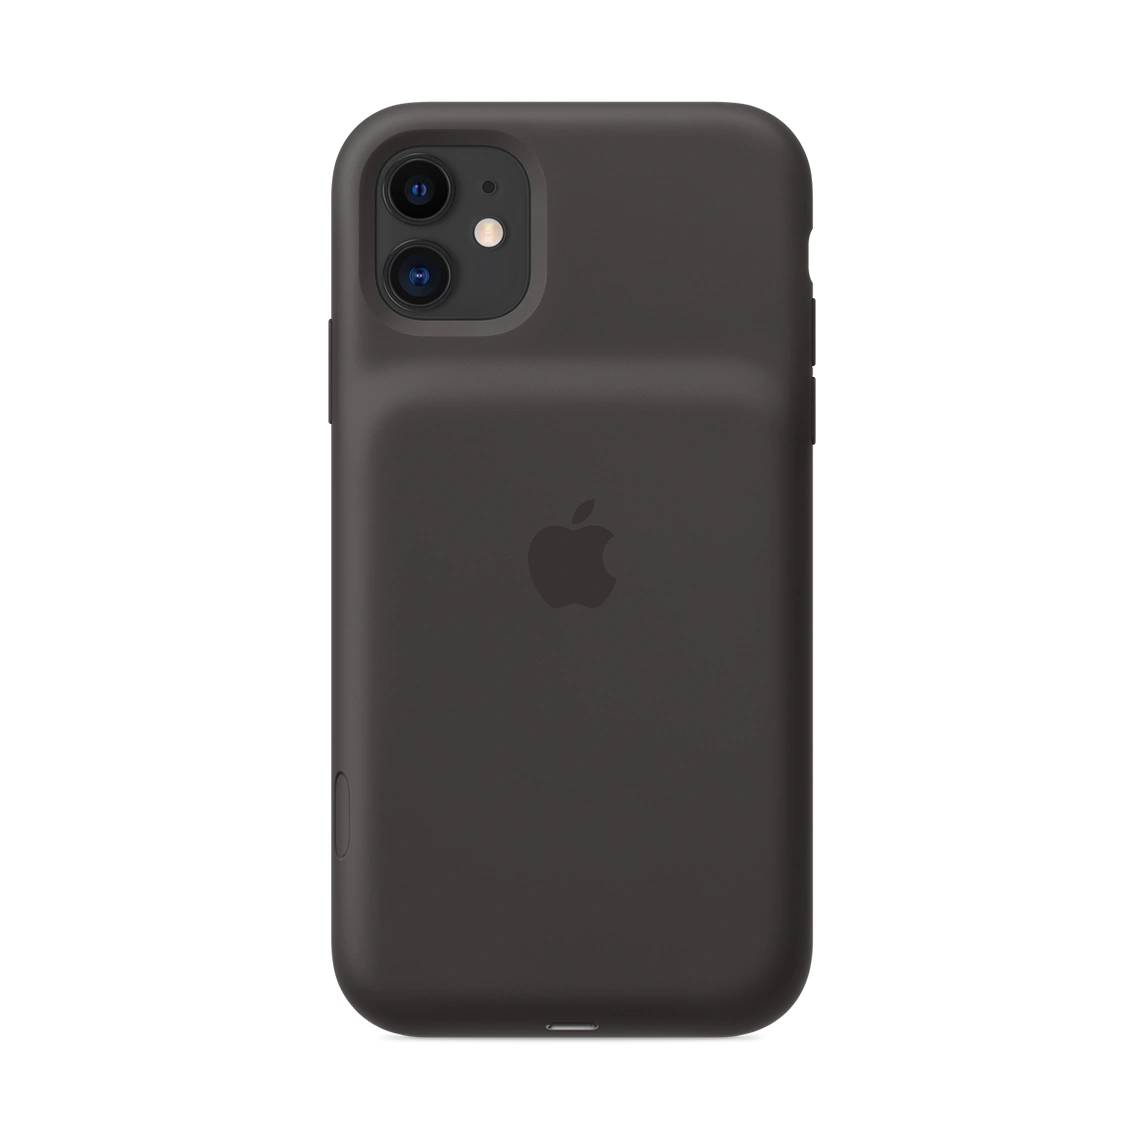 Apple iPhone 11 Smart Battery Case